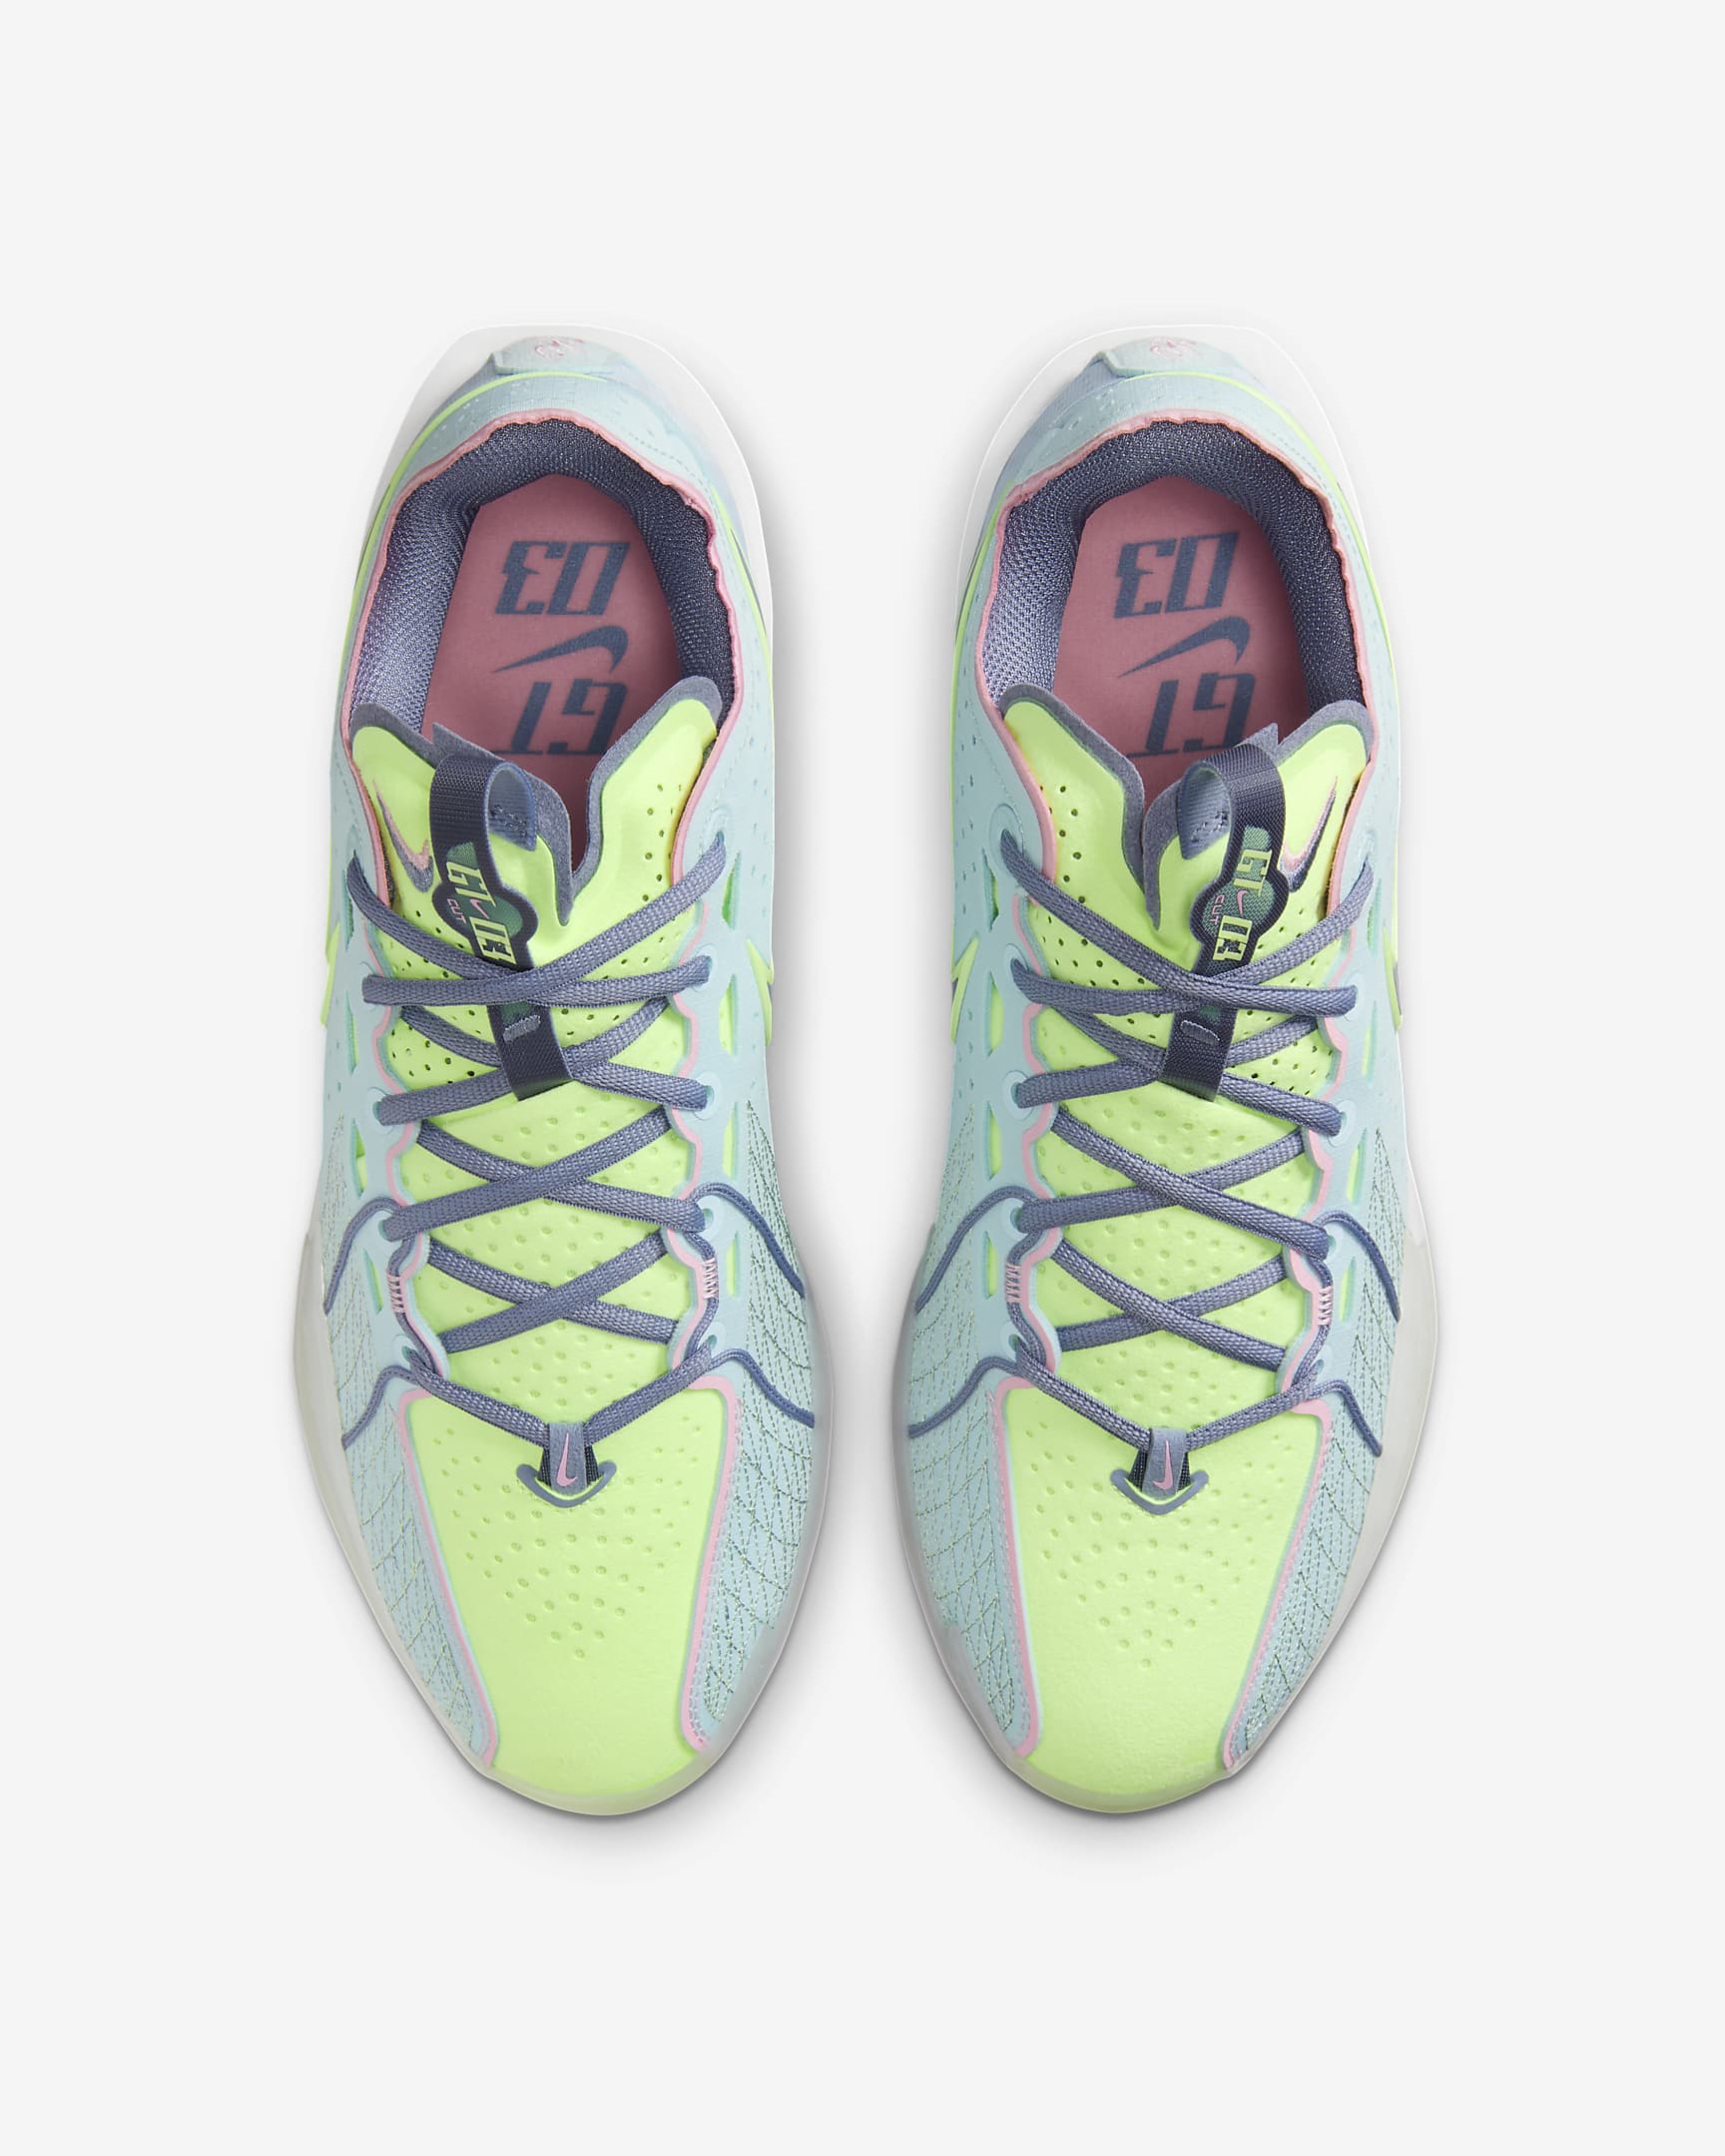 Nike G.T. Cut 3 Basketball Shoes - Glacier Blue/Bright Mandarin/Ashen Slate/Light Armoury Blue